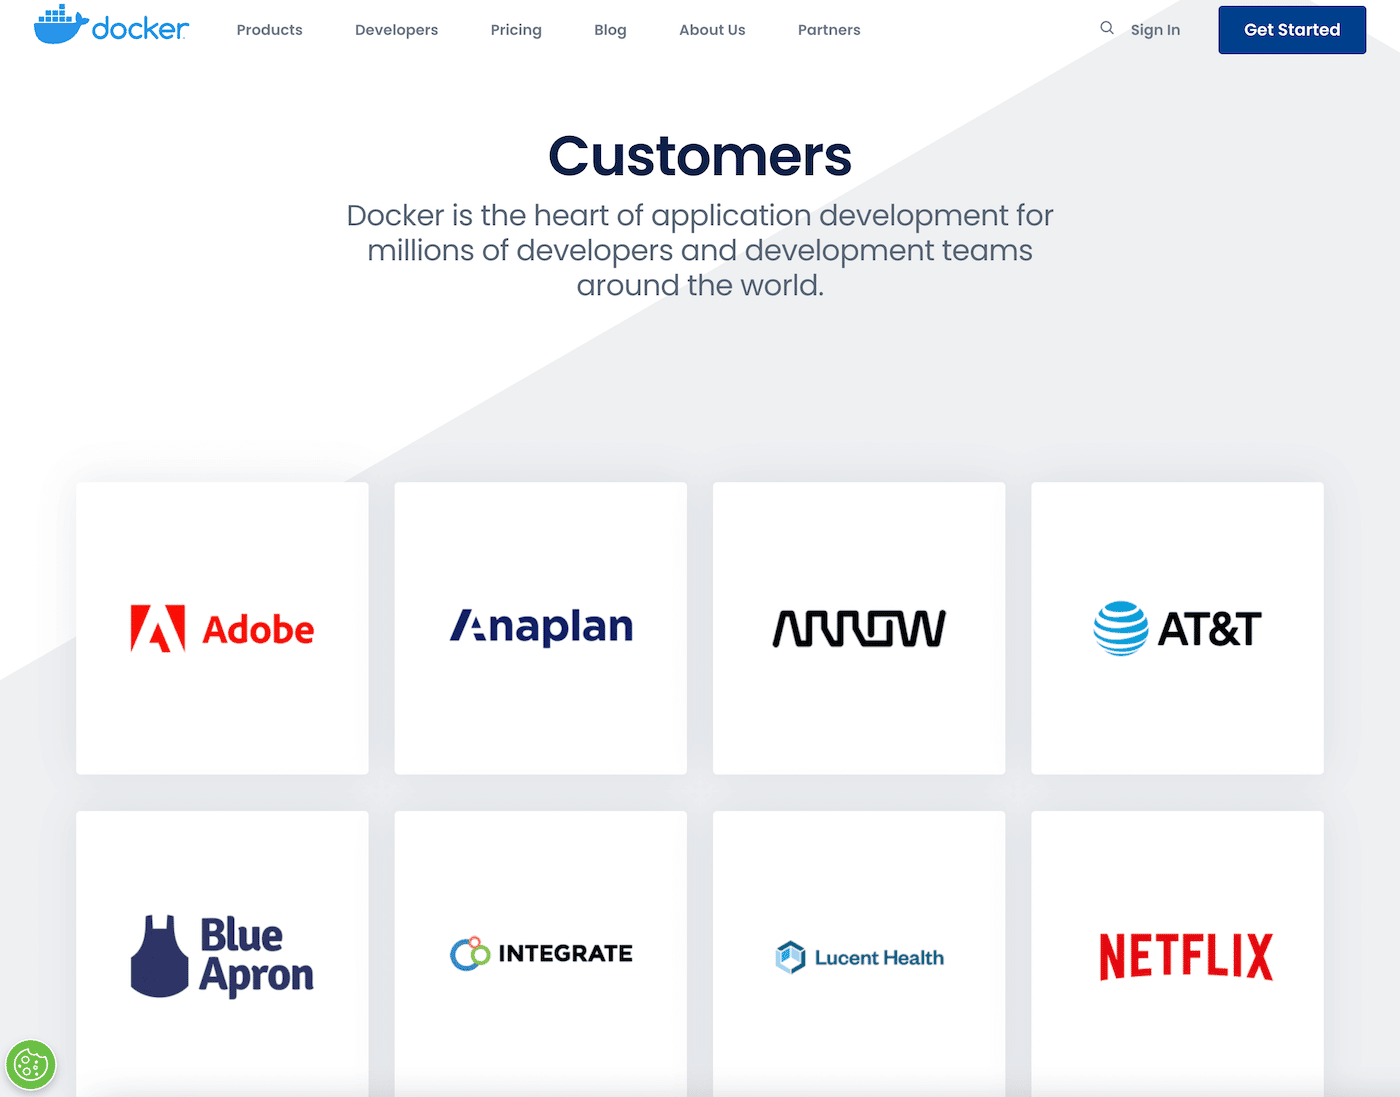 A screenshot of companies using Docker